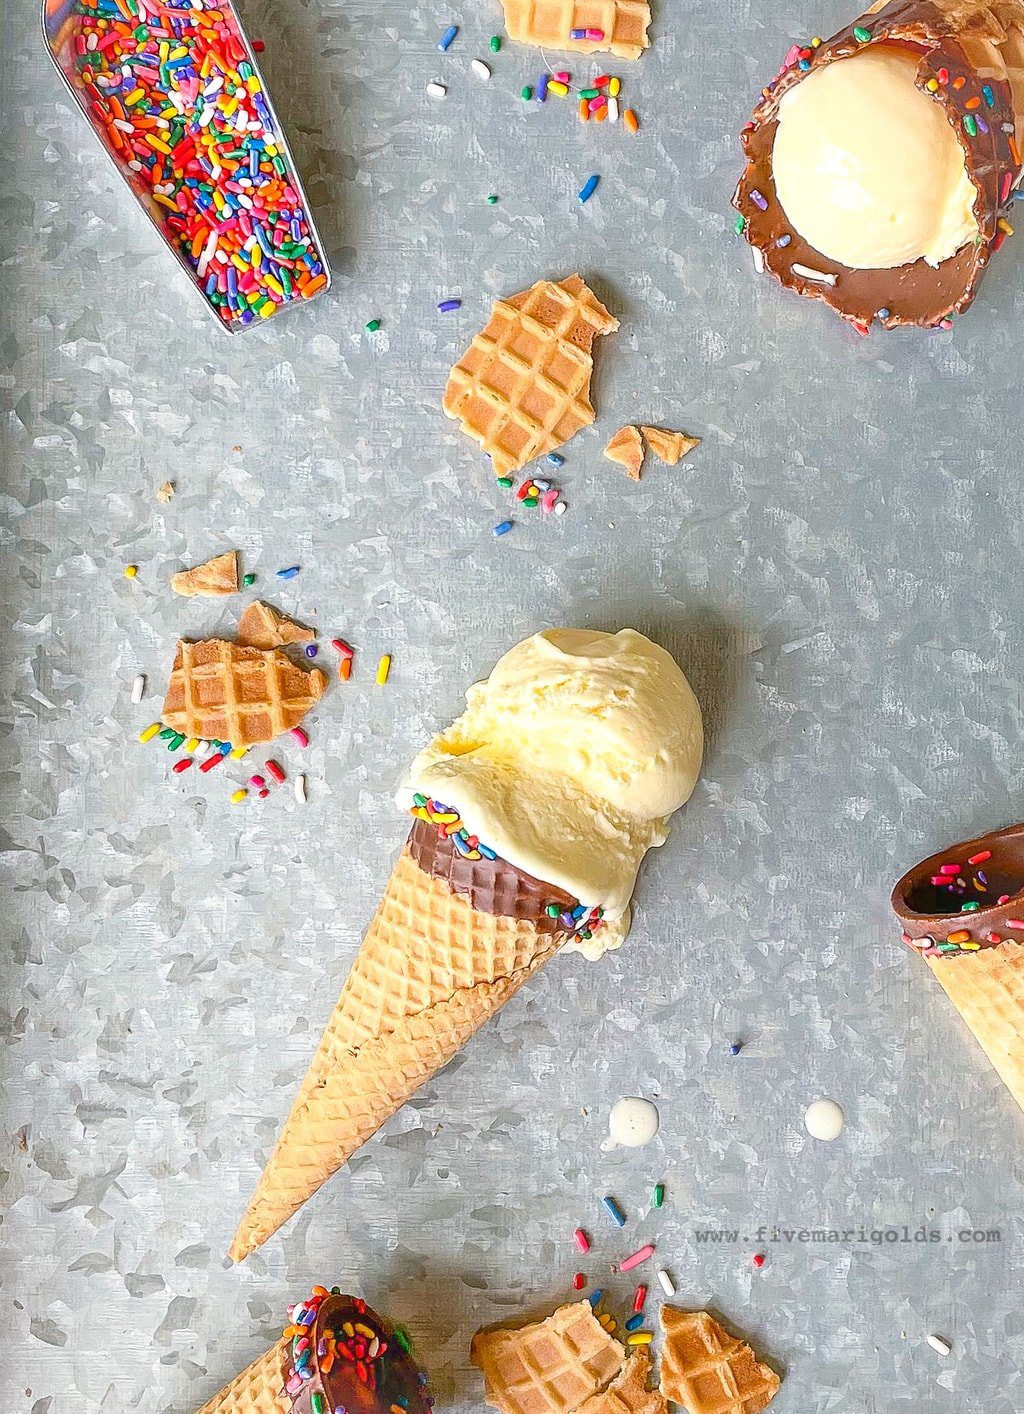 Marshmallow vanilla ice cream cones on metal background with sprinkles